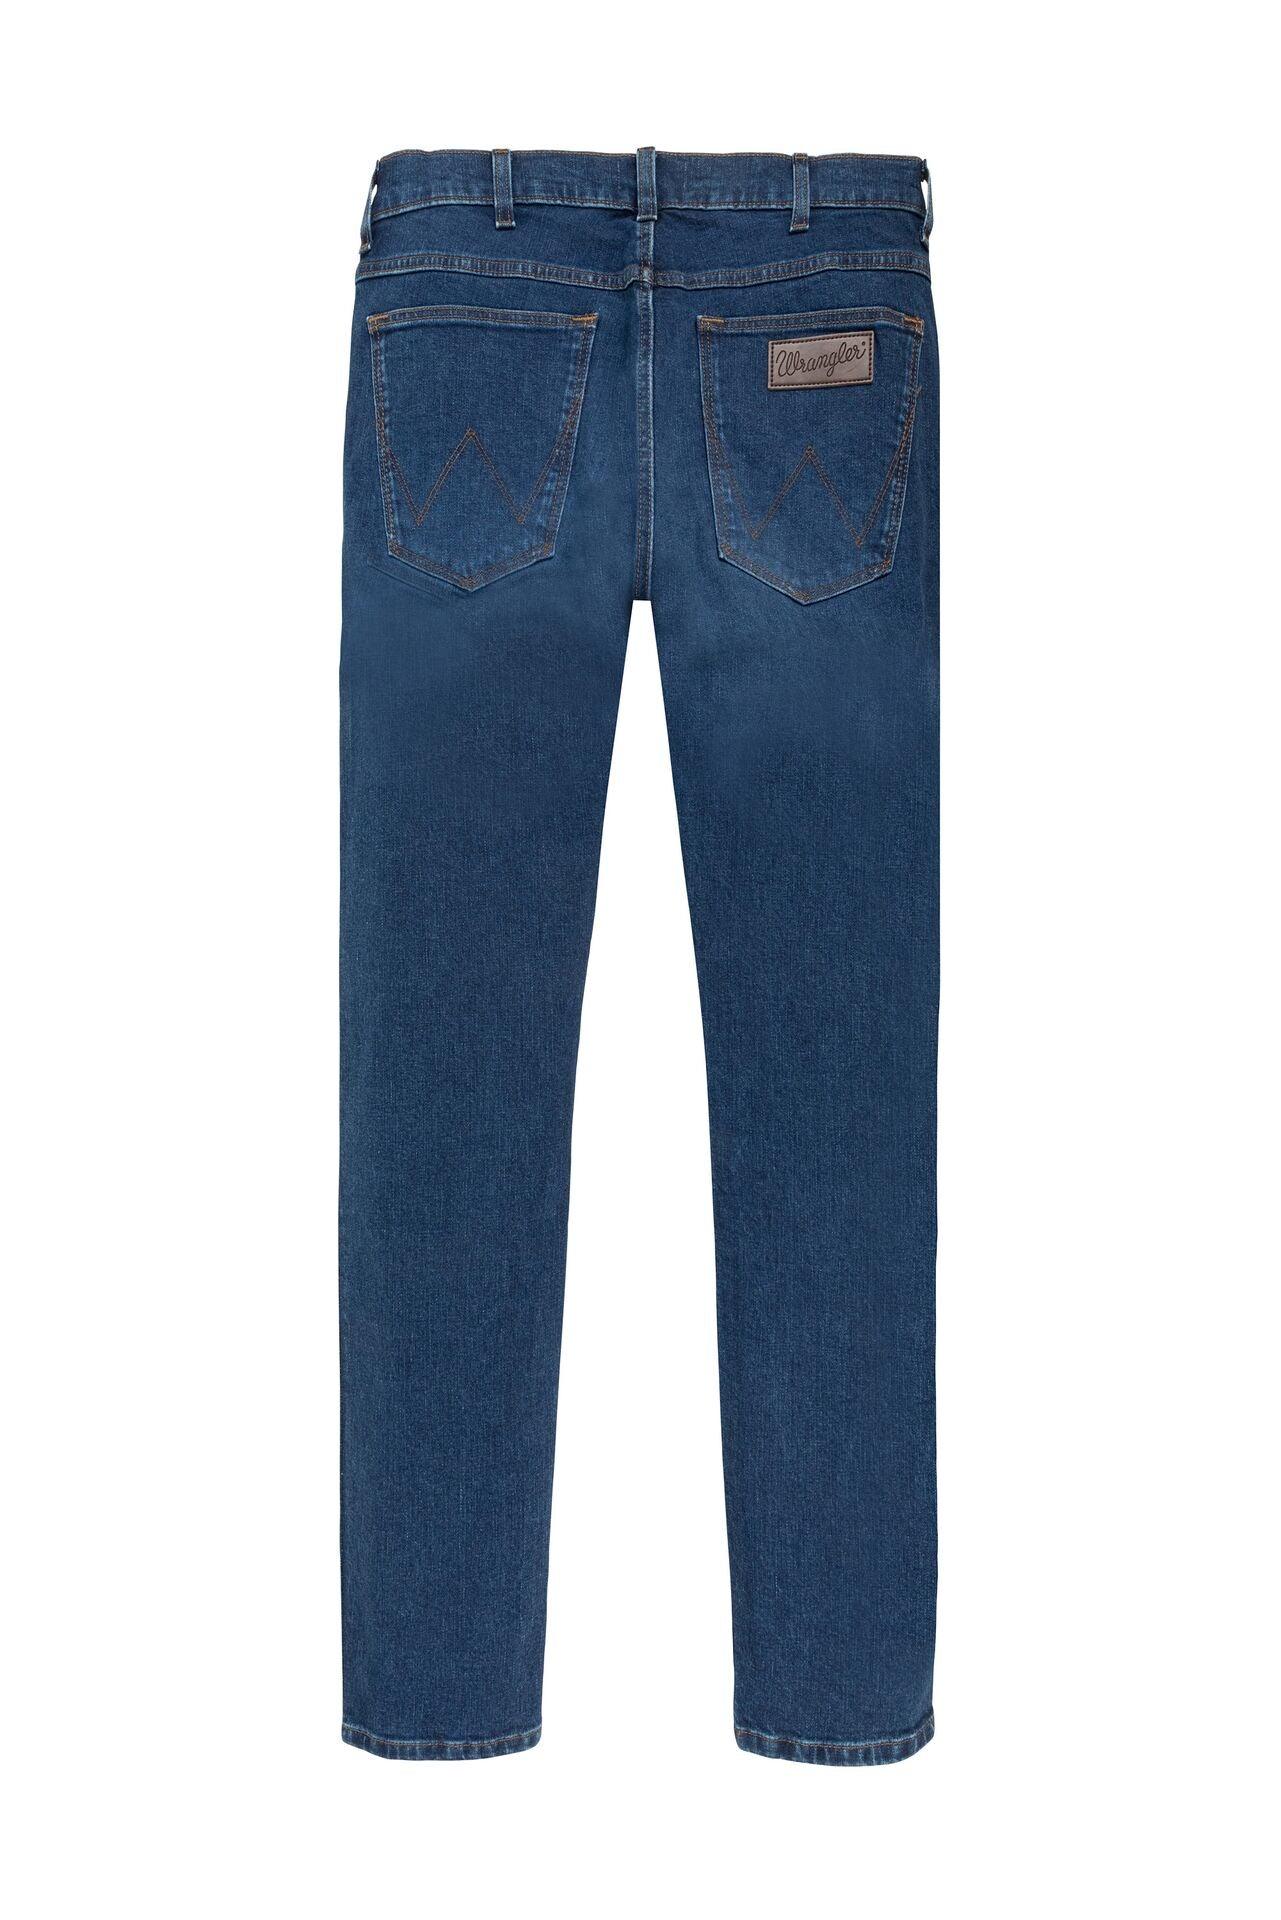 WRANGLER - ג'ינס BRYSON כחול כהה - MASHBIR//365